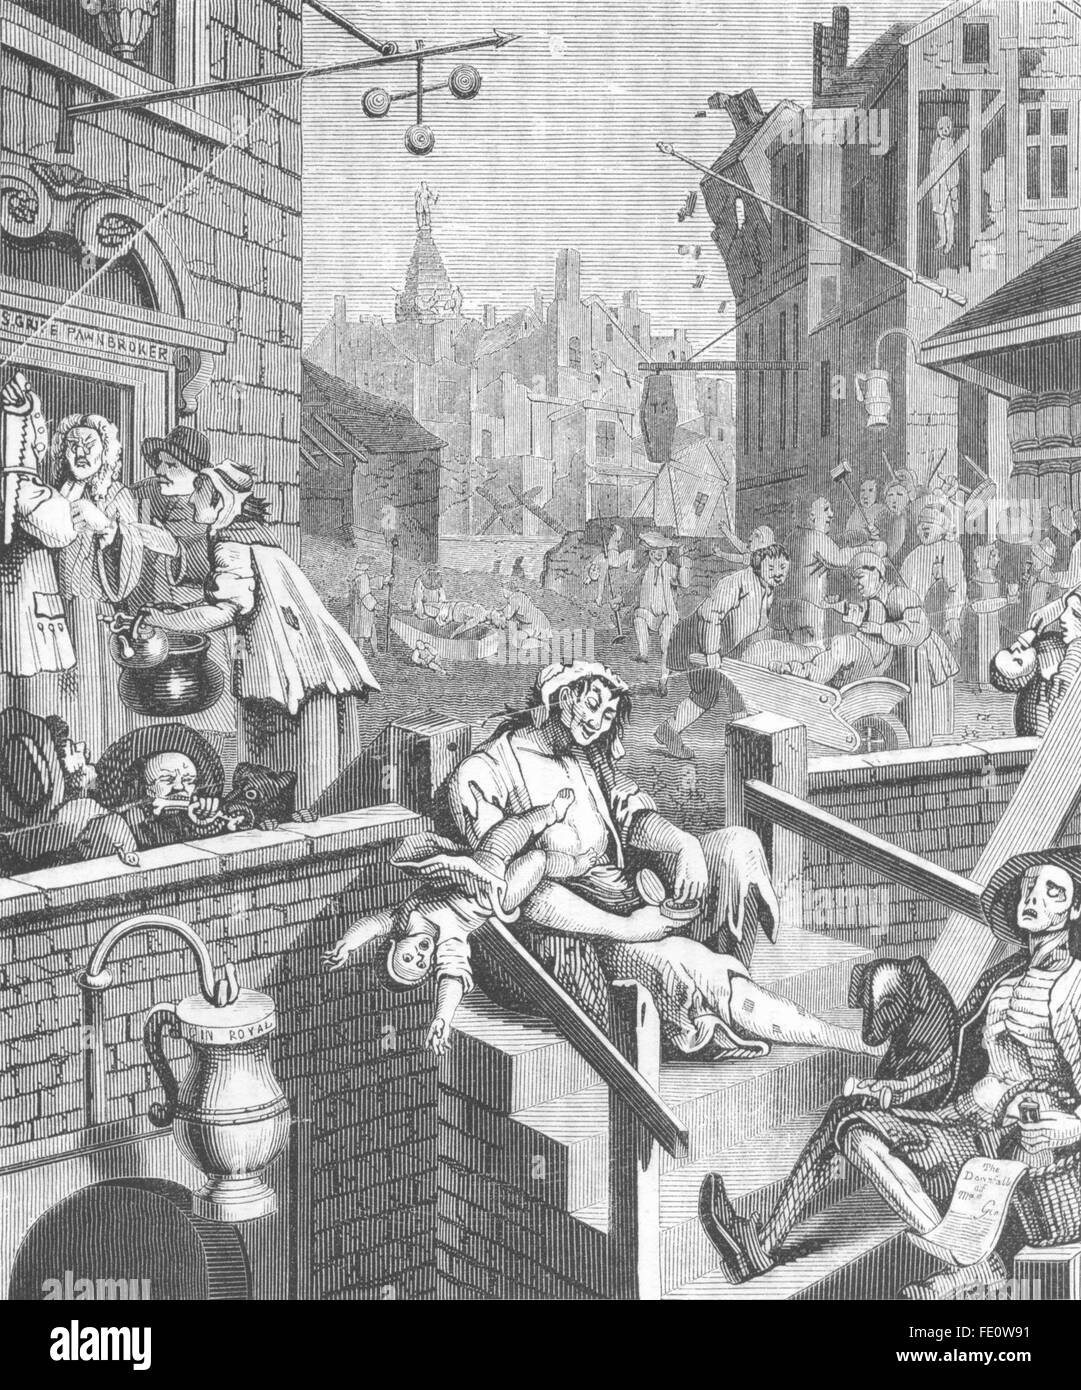 TOWNS: Gin lane, antique print 1845 Stock Photo